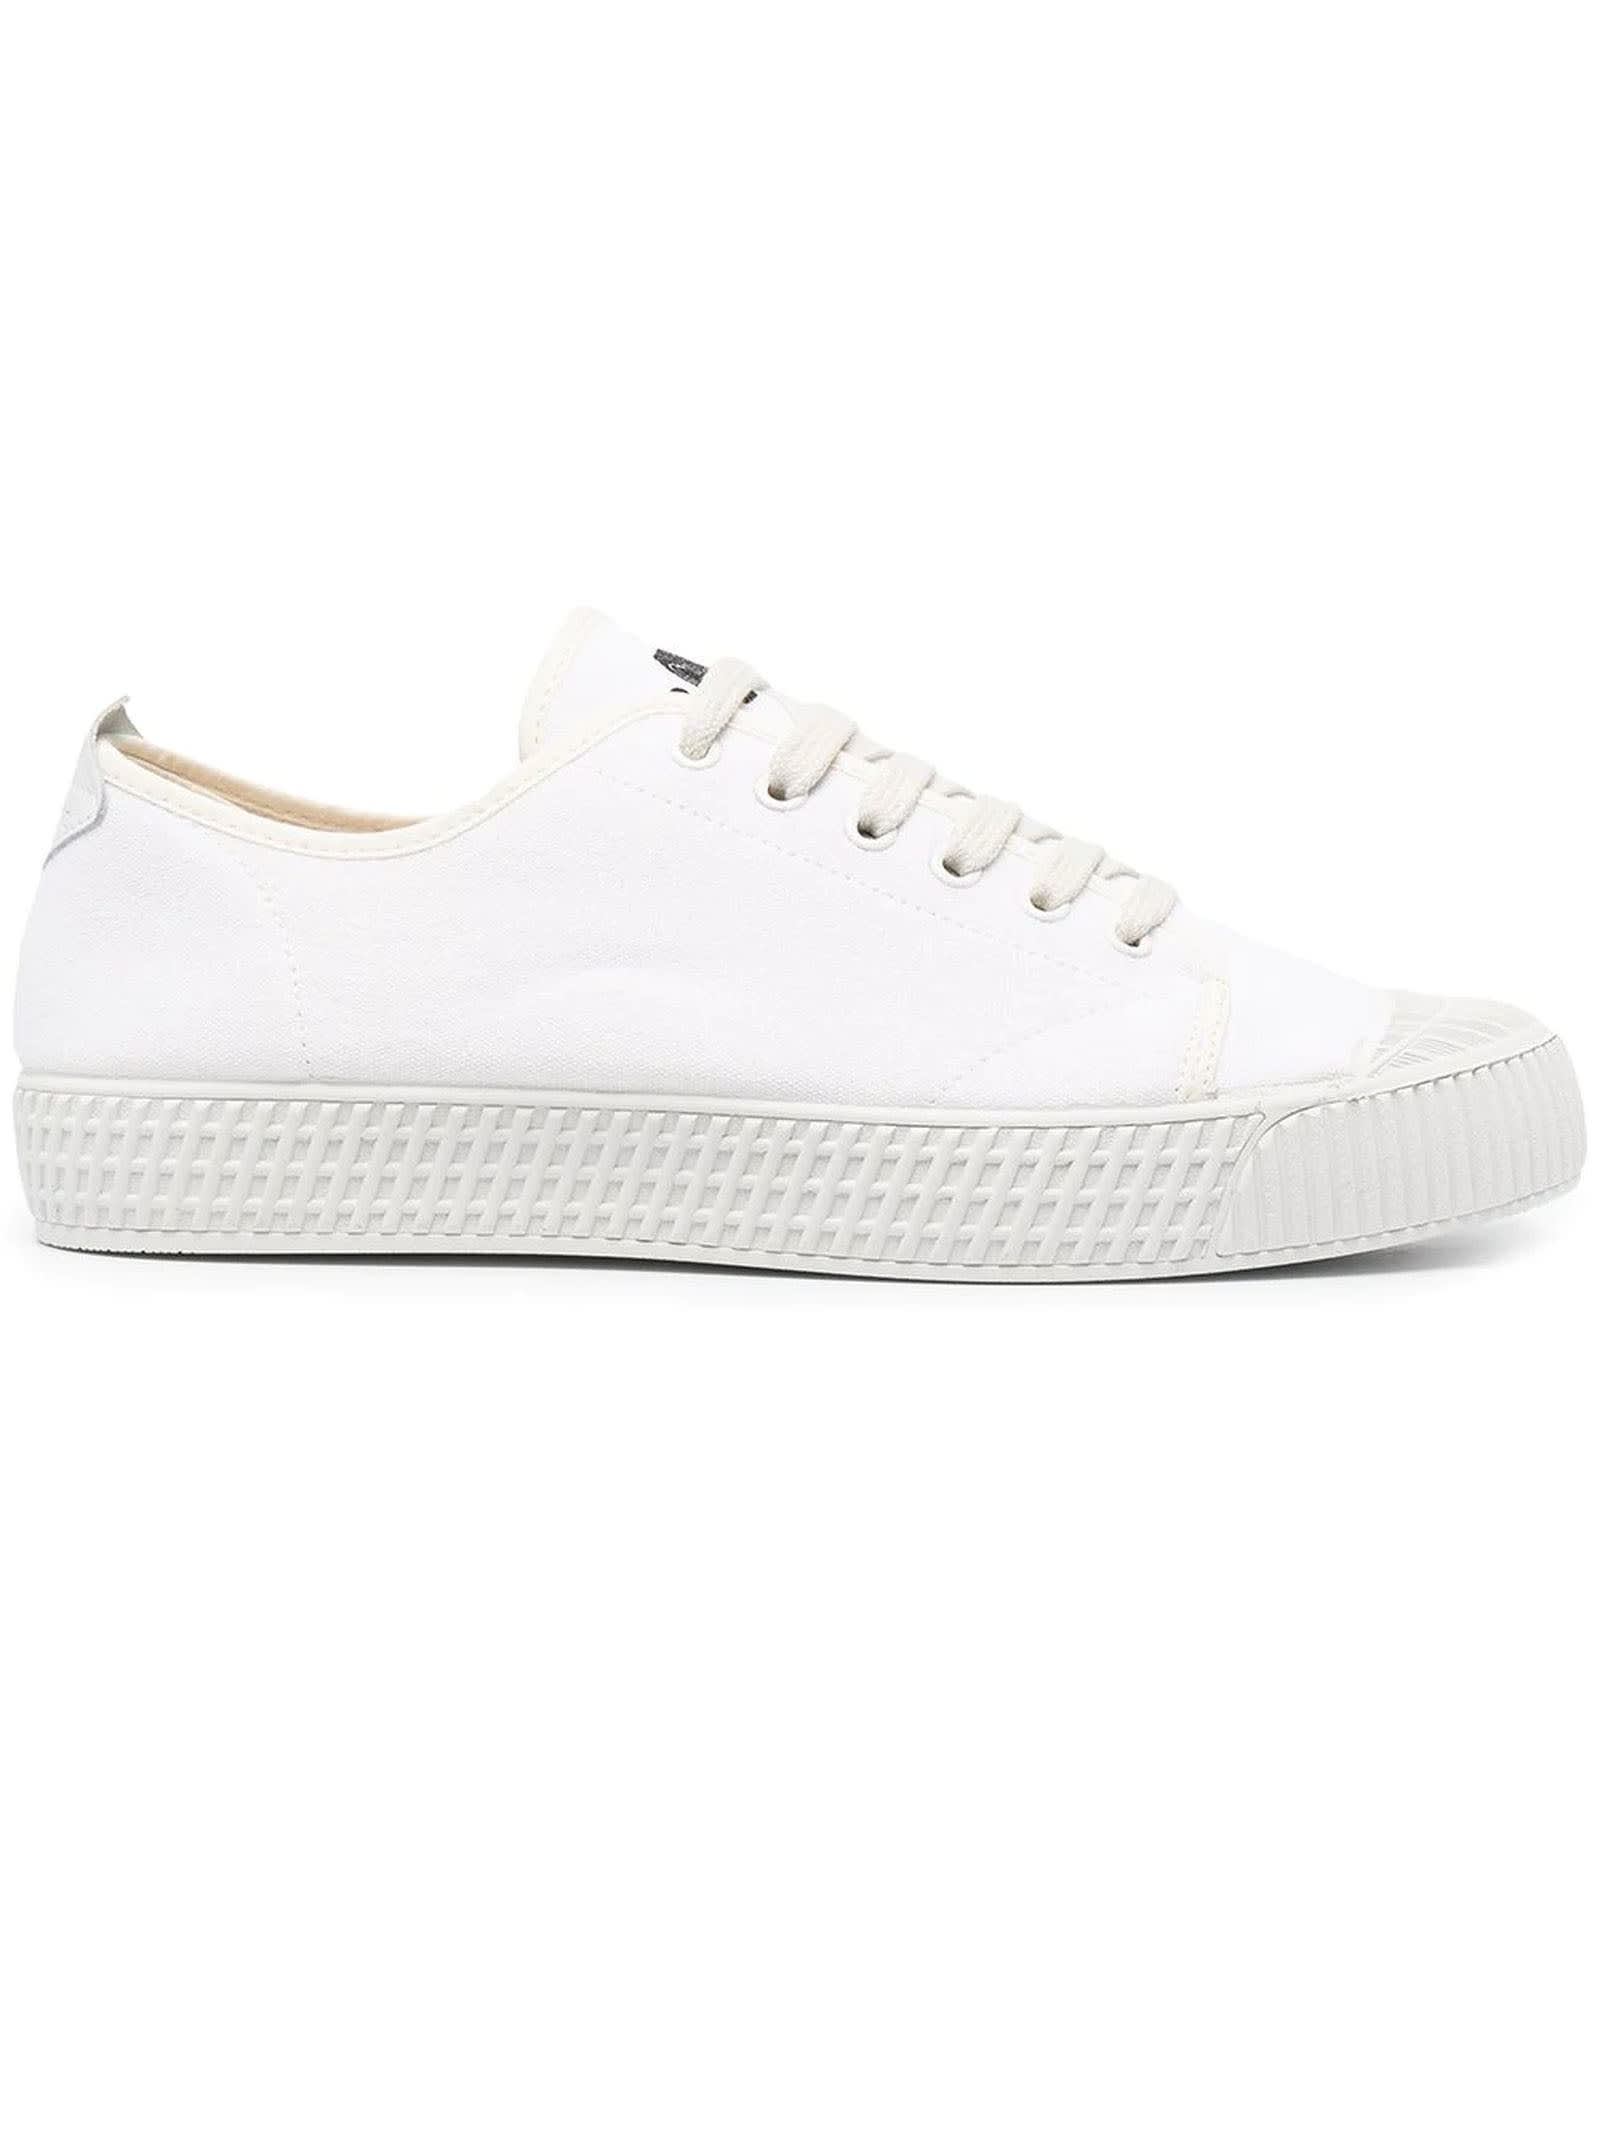 Car Shoe White Cotton Sneakers